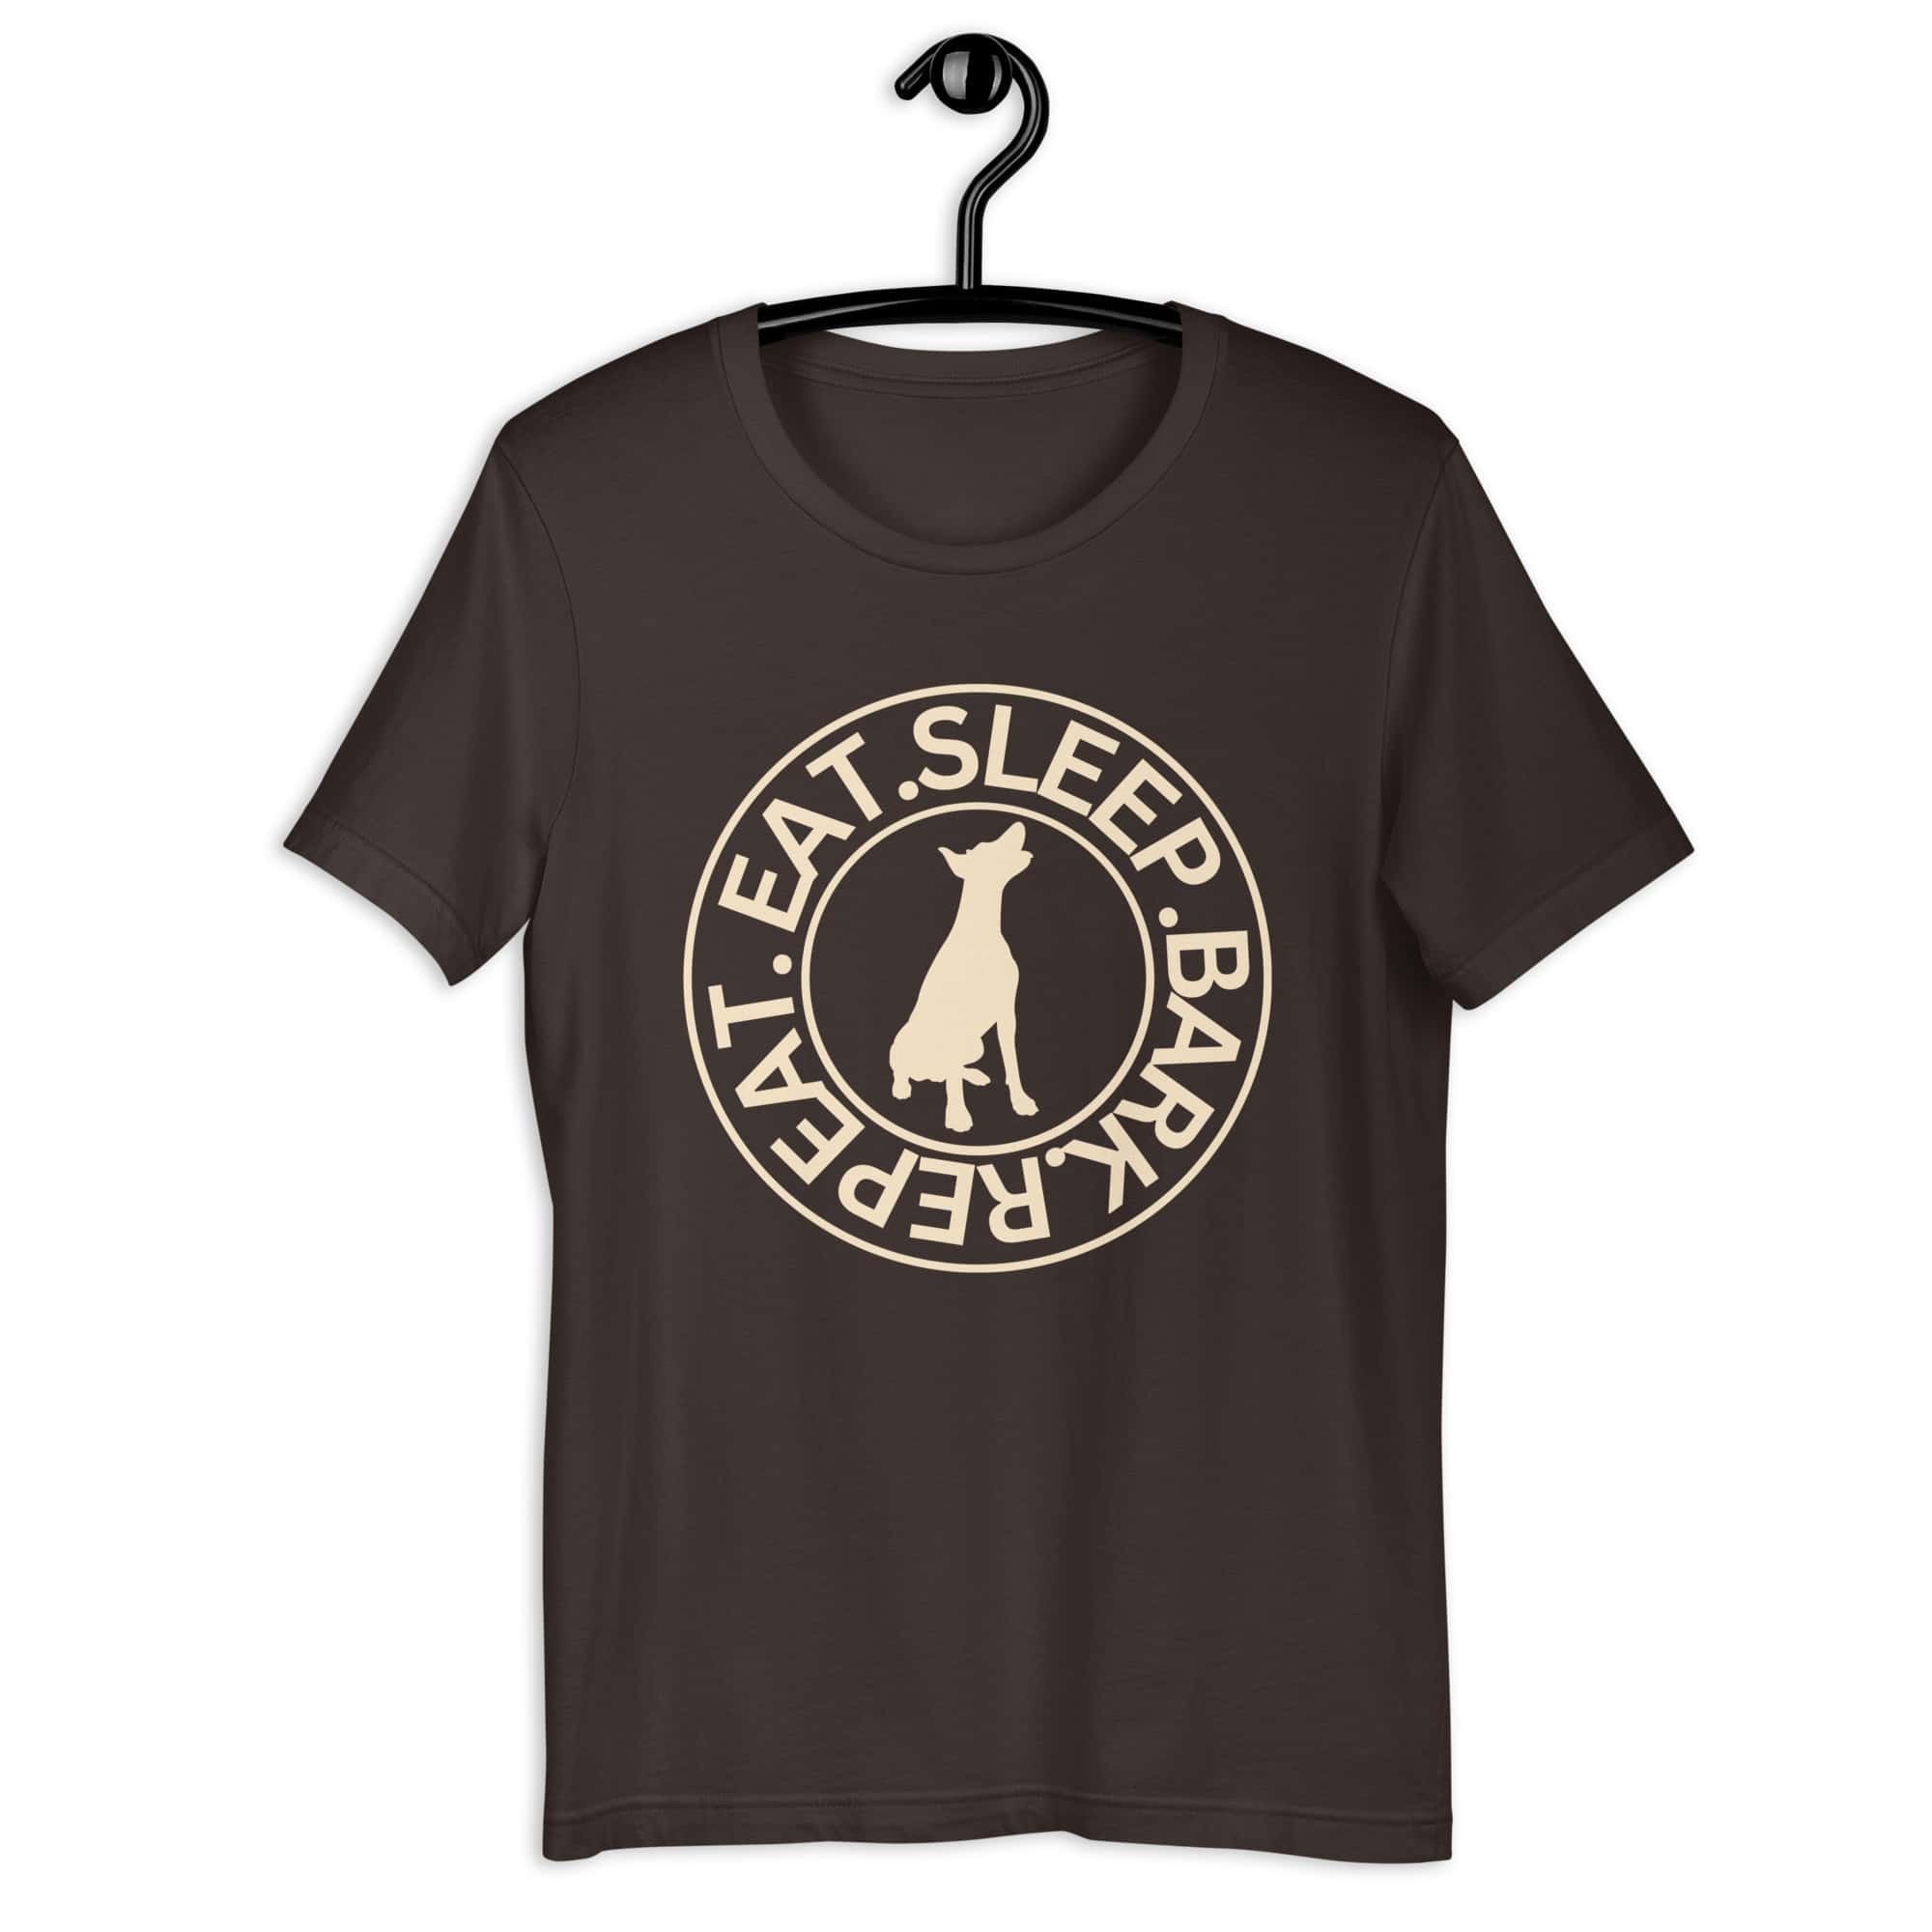 Eat Sleep Bark Repeat Terrier Unisex T-Shirt. Brown